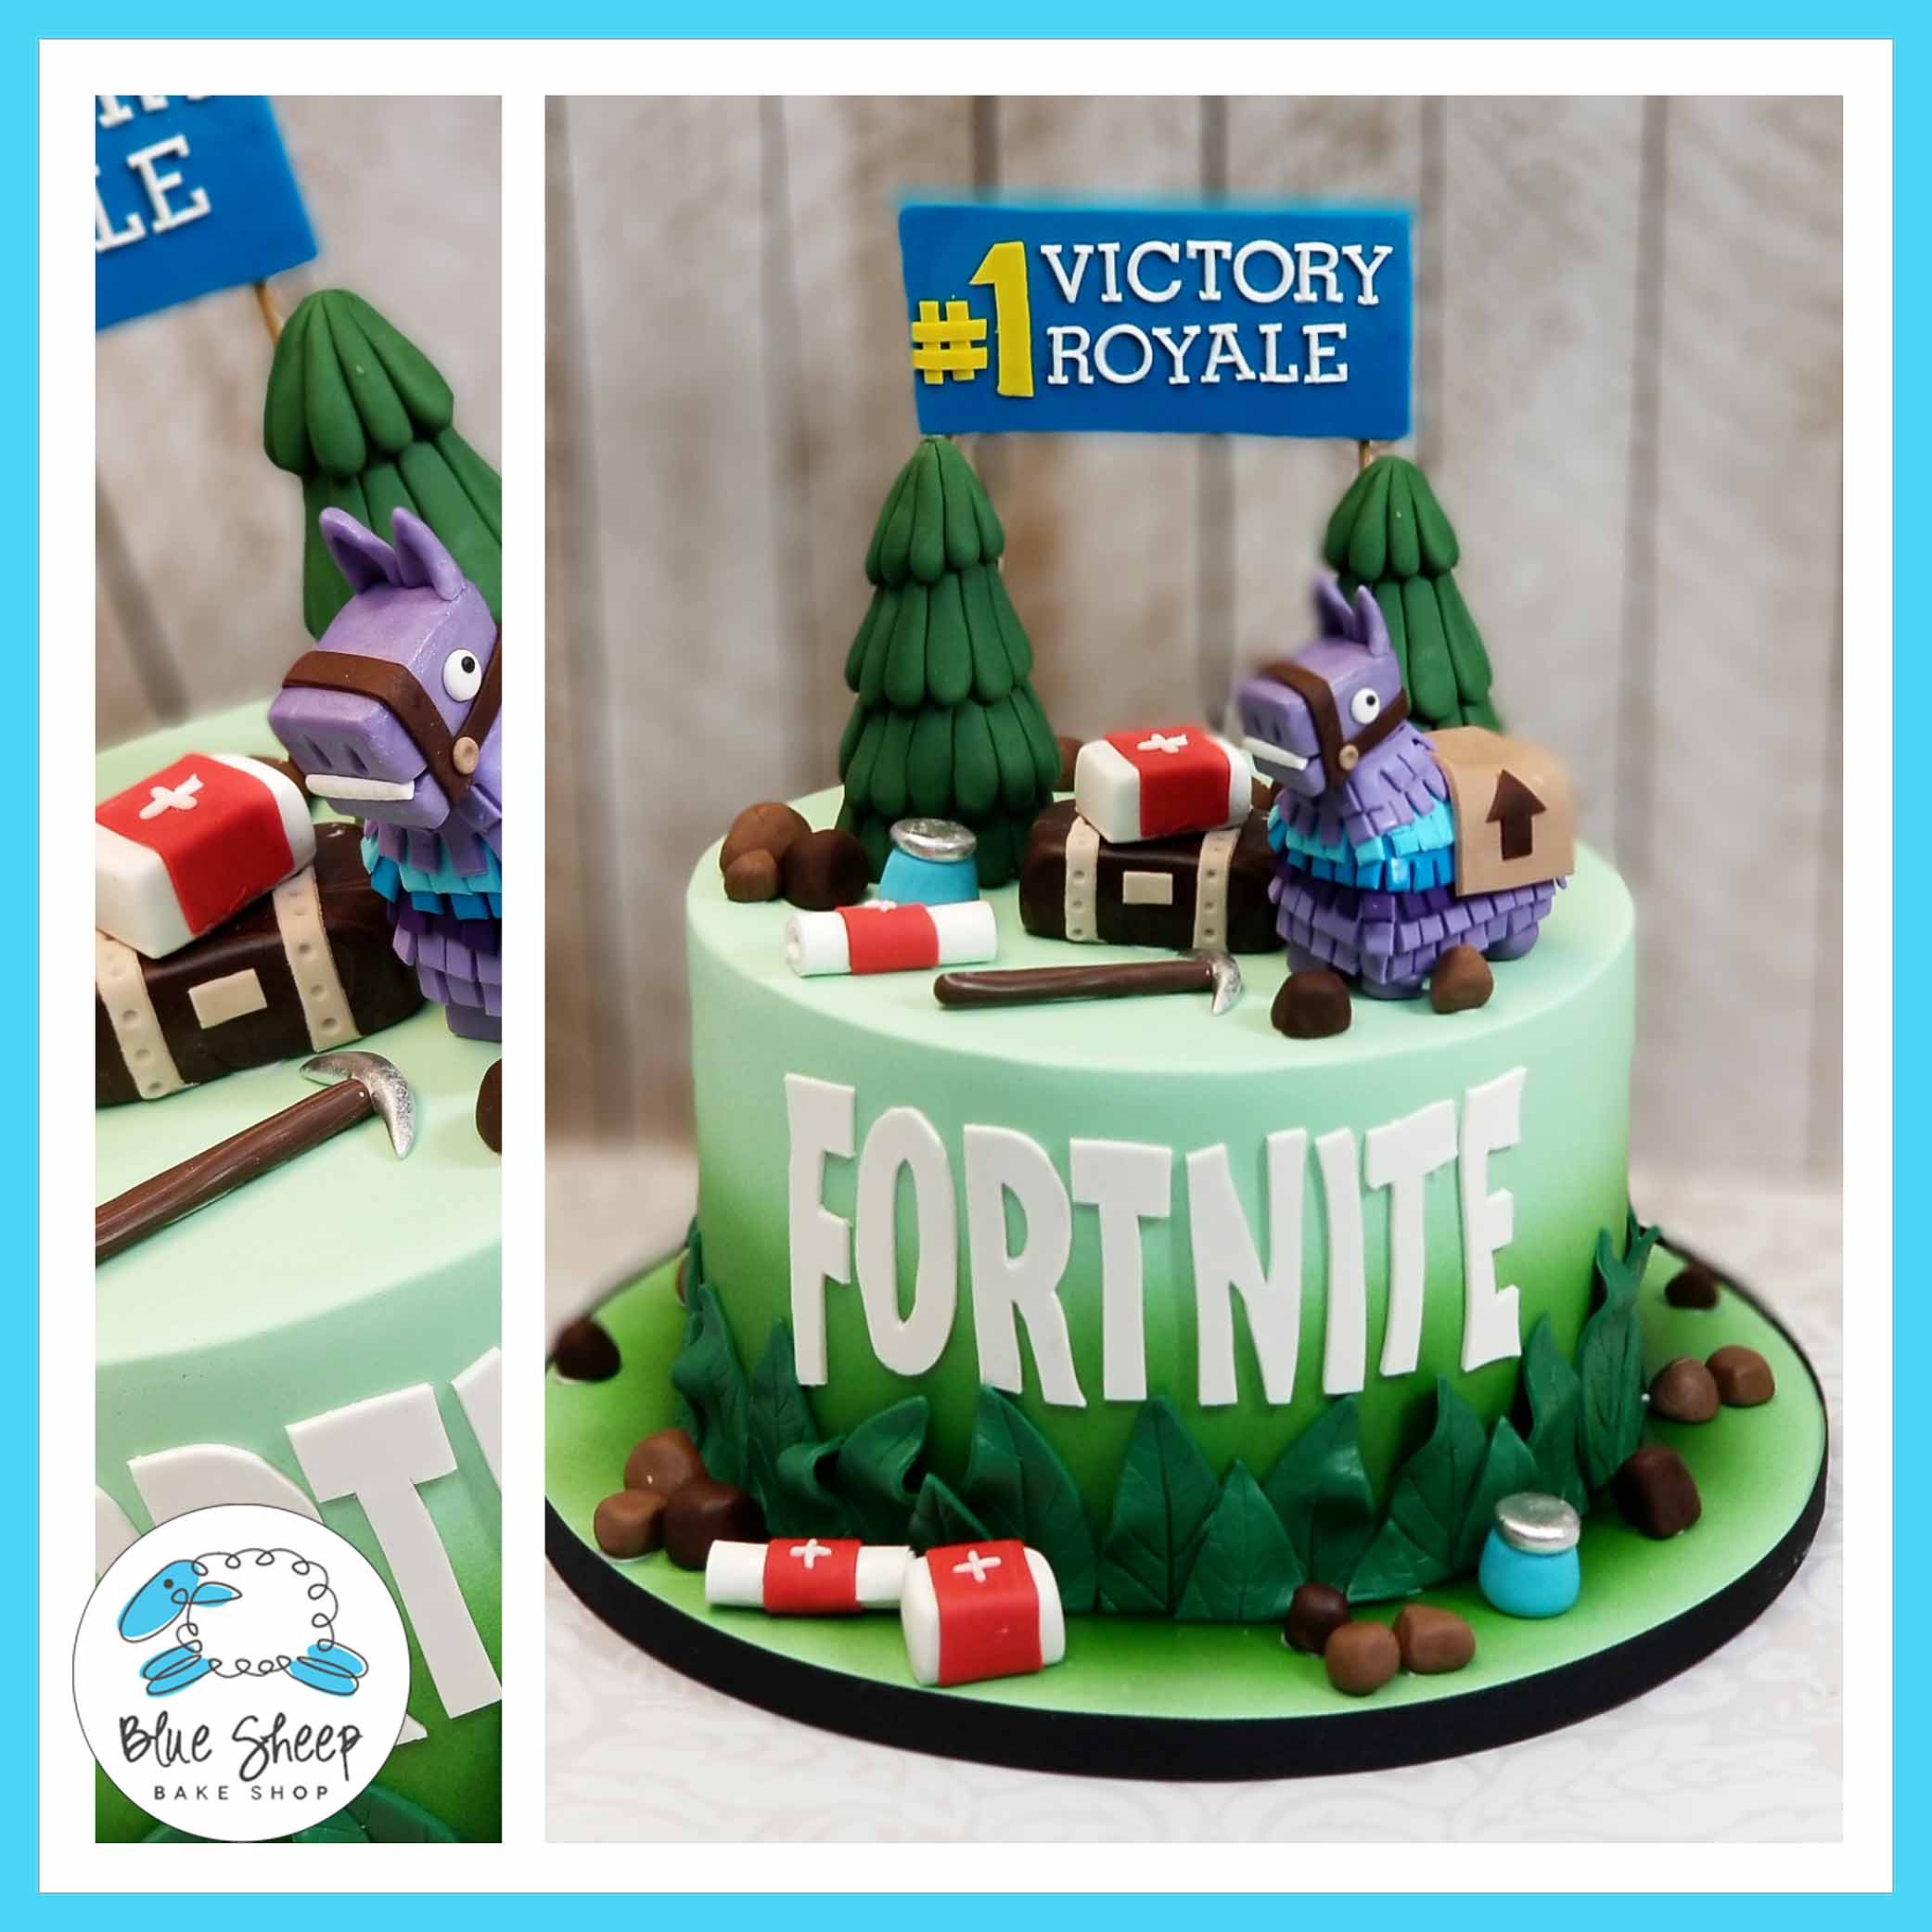 fortnite battle royal cake nj custom cakes blue sheep bake shop - fortnite number cake